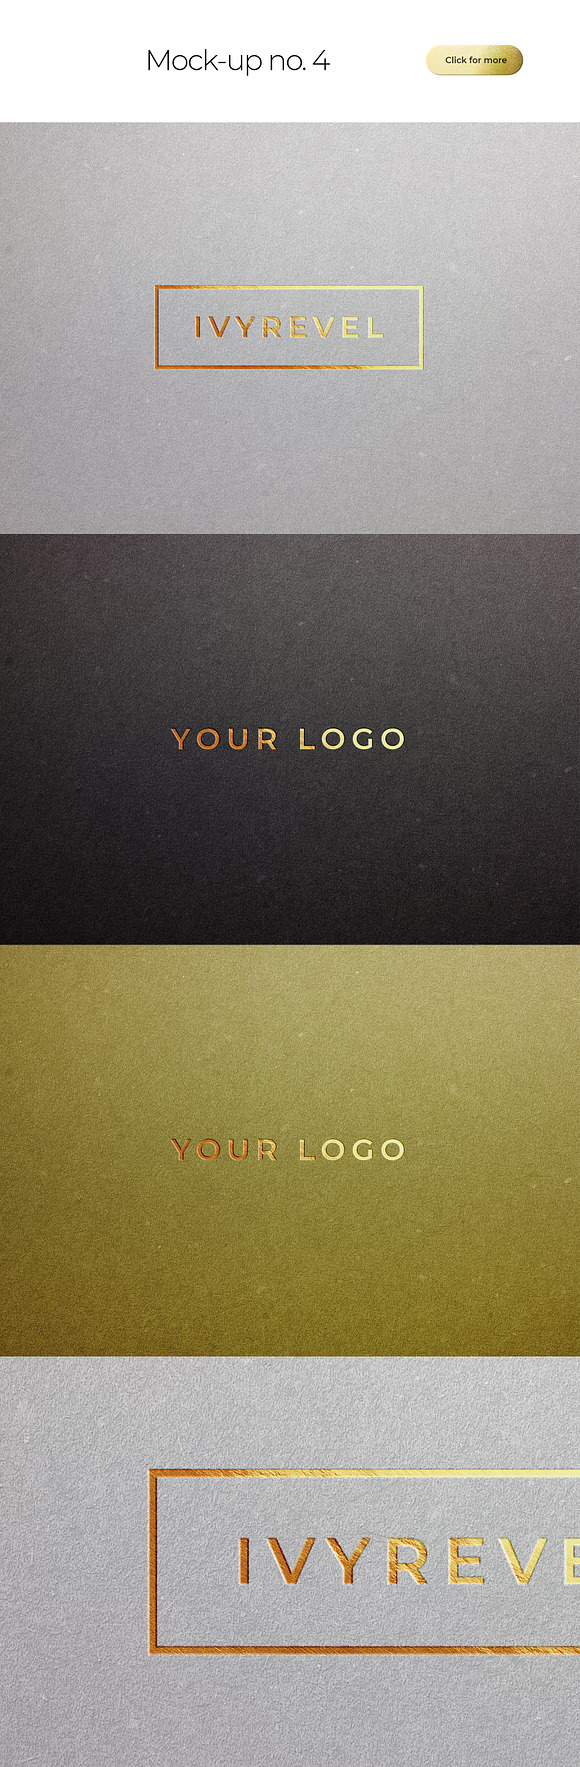 50 logo mockup branding bundle in Branding Mockups - product preview 5